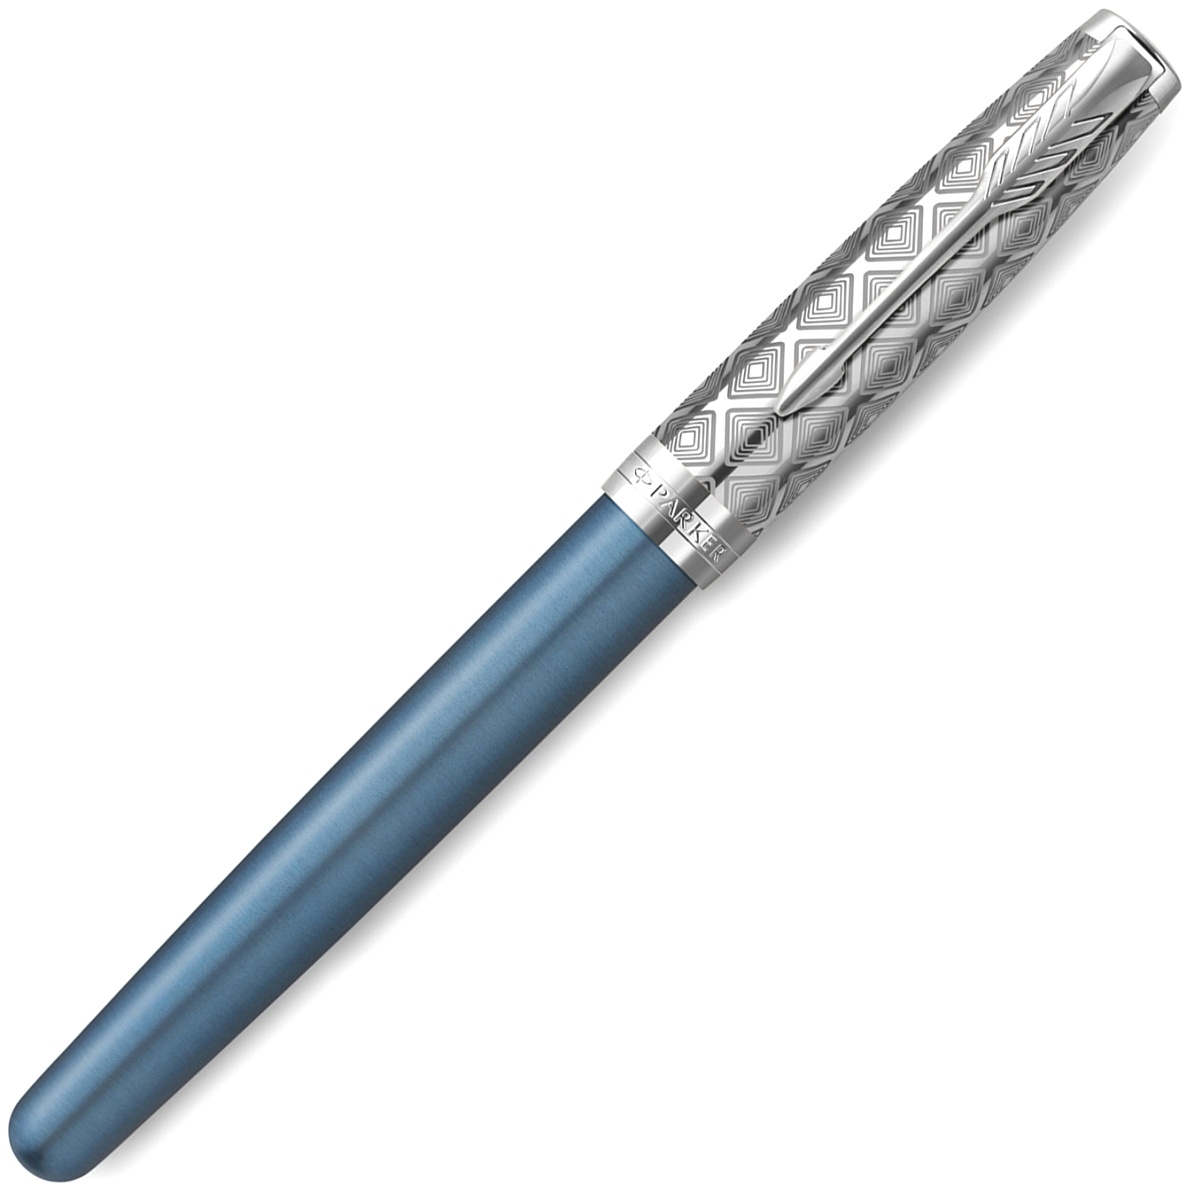  Ручка перьевая Parker Sonnet Premium F537, Metal Blue CT (Перо F), фото 2